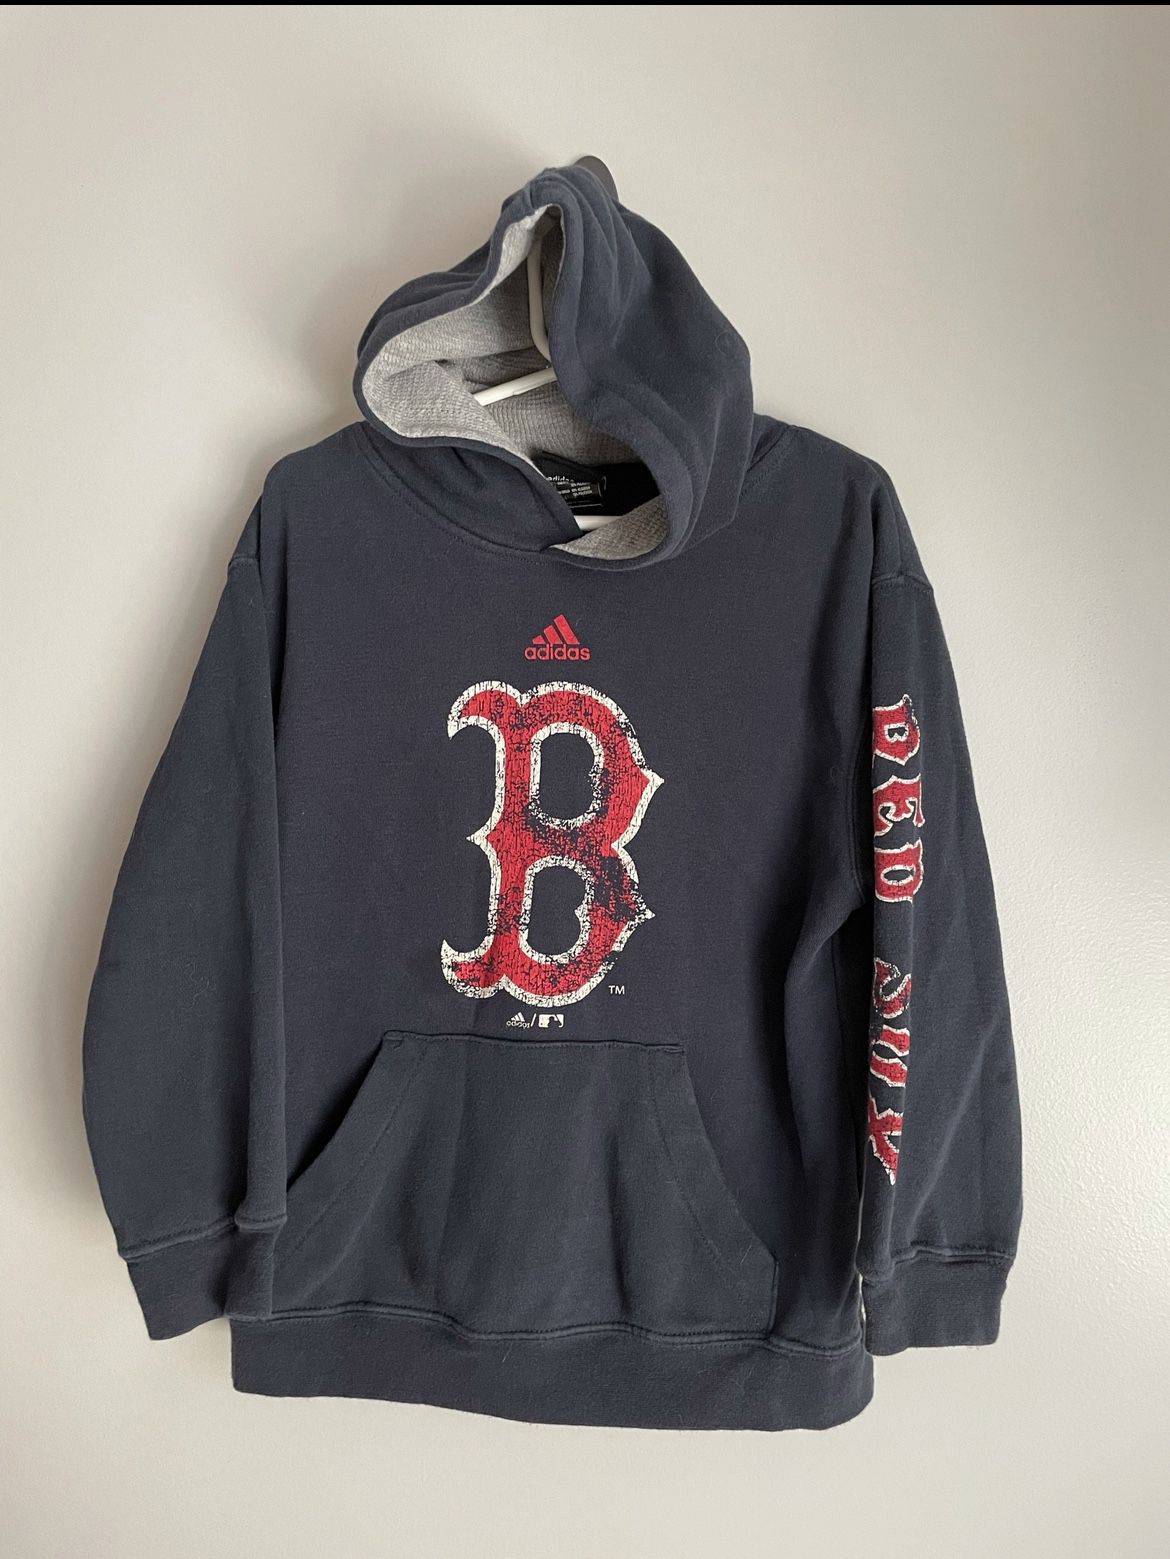 Adidas Boston Red Sox Boys Hoodie Hooded Sweatshirt Size 8 medium 